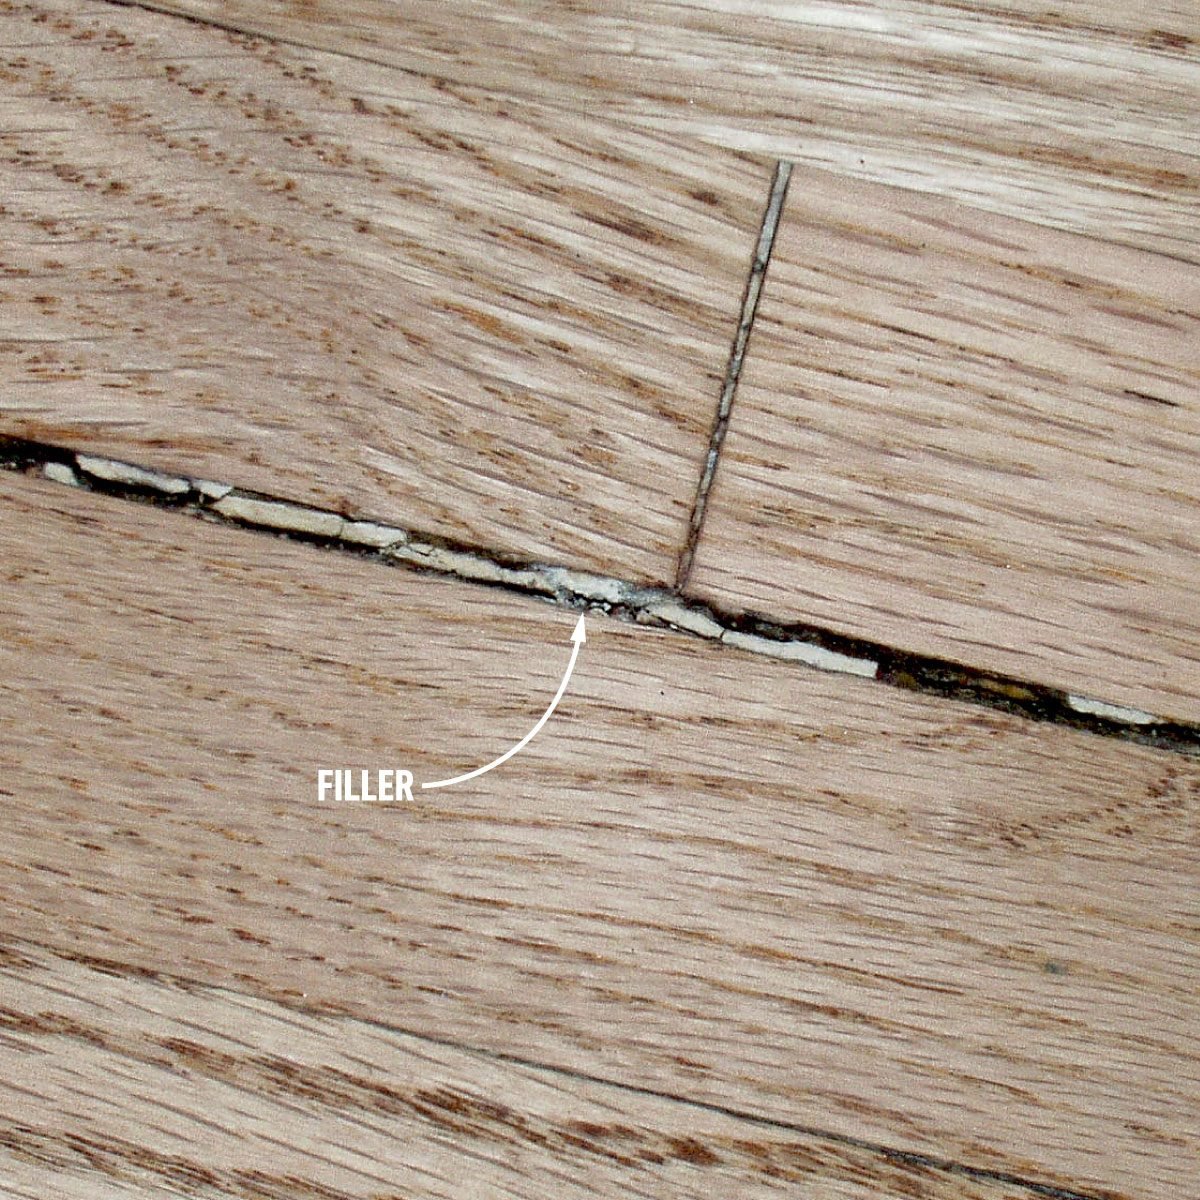 Dont fill cracks on wood floors